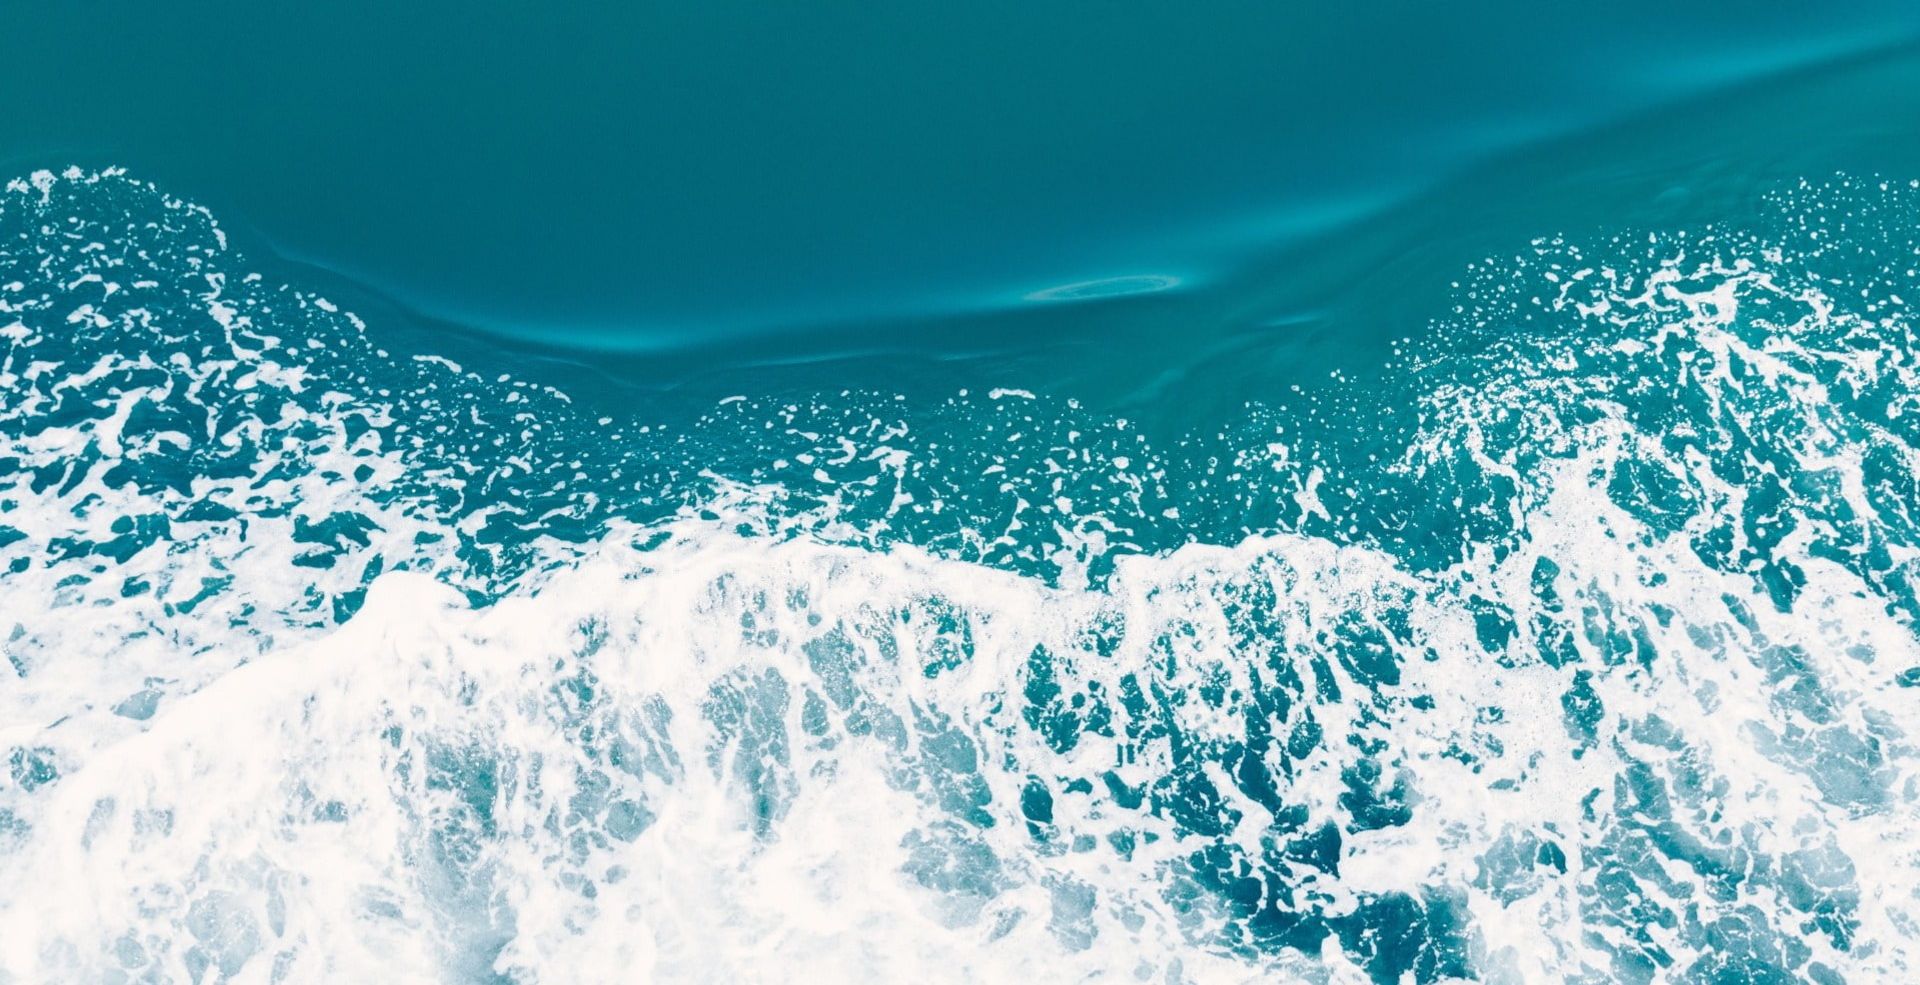 bird's view of blue ocean waves